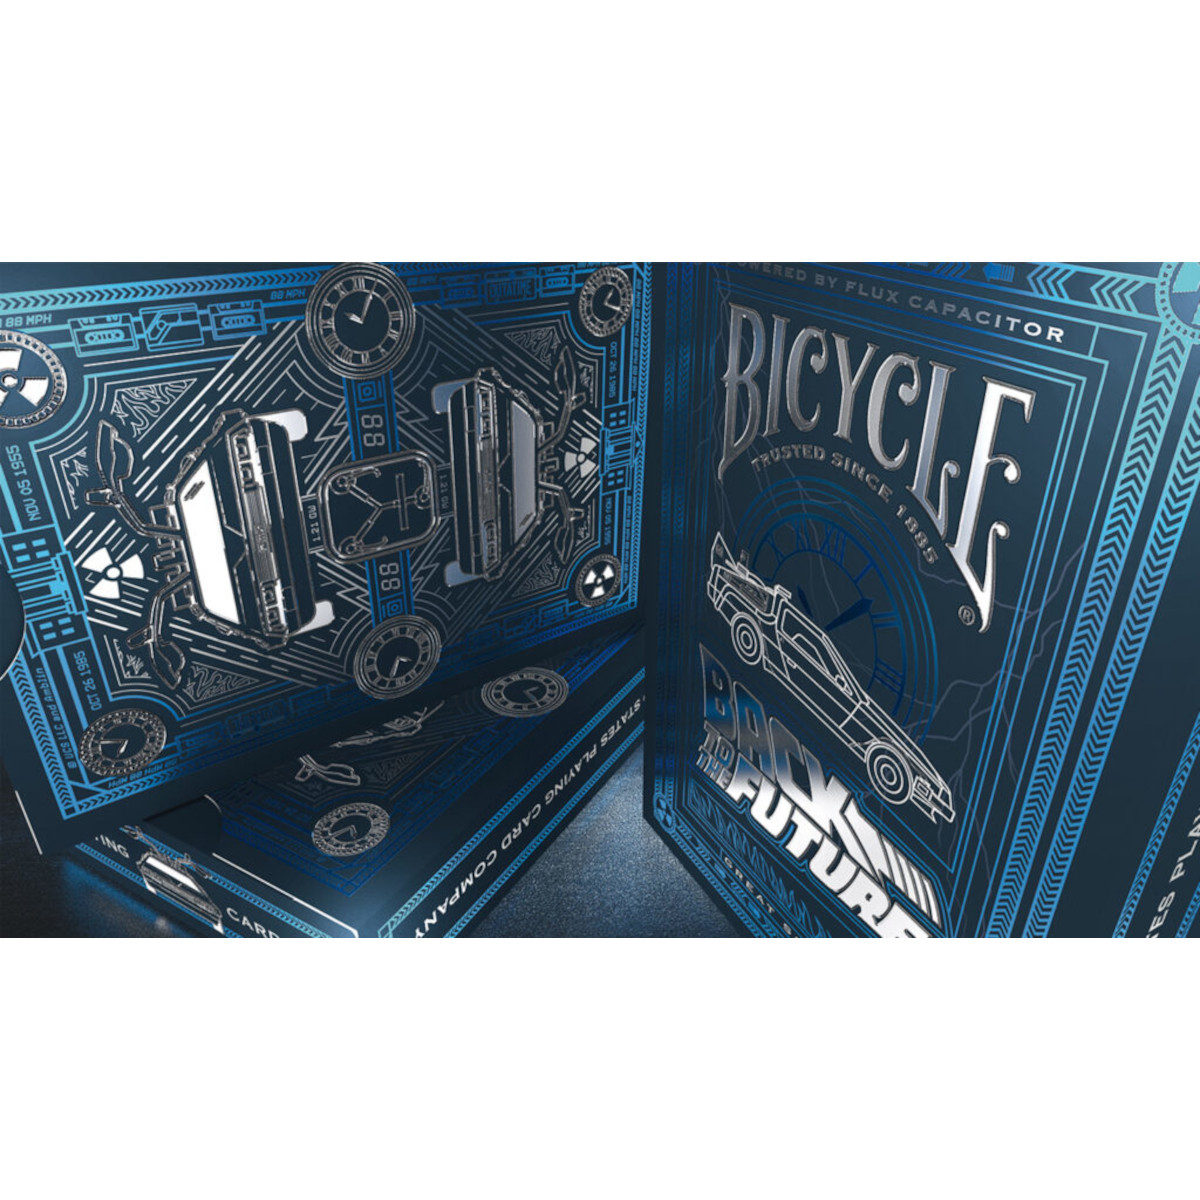 ASS ALTENBURGER Bicycle - Back Kartendeck Kartenspiel to the Future